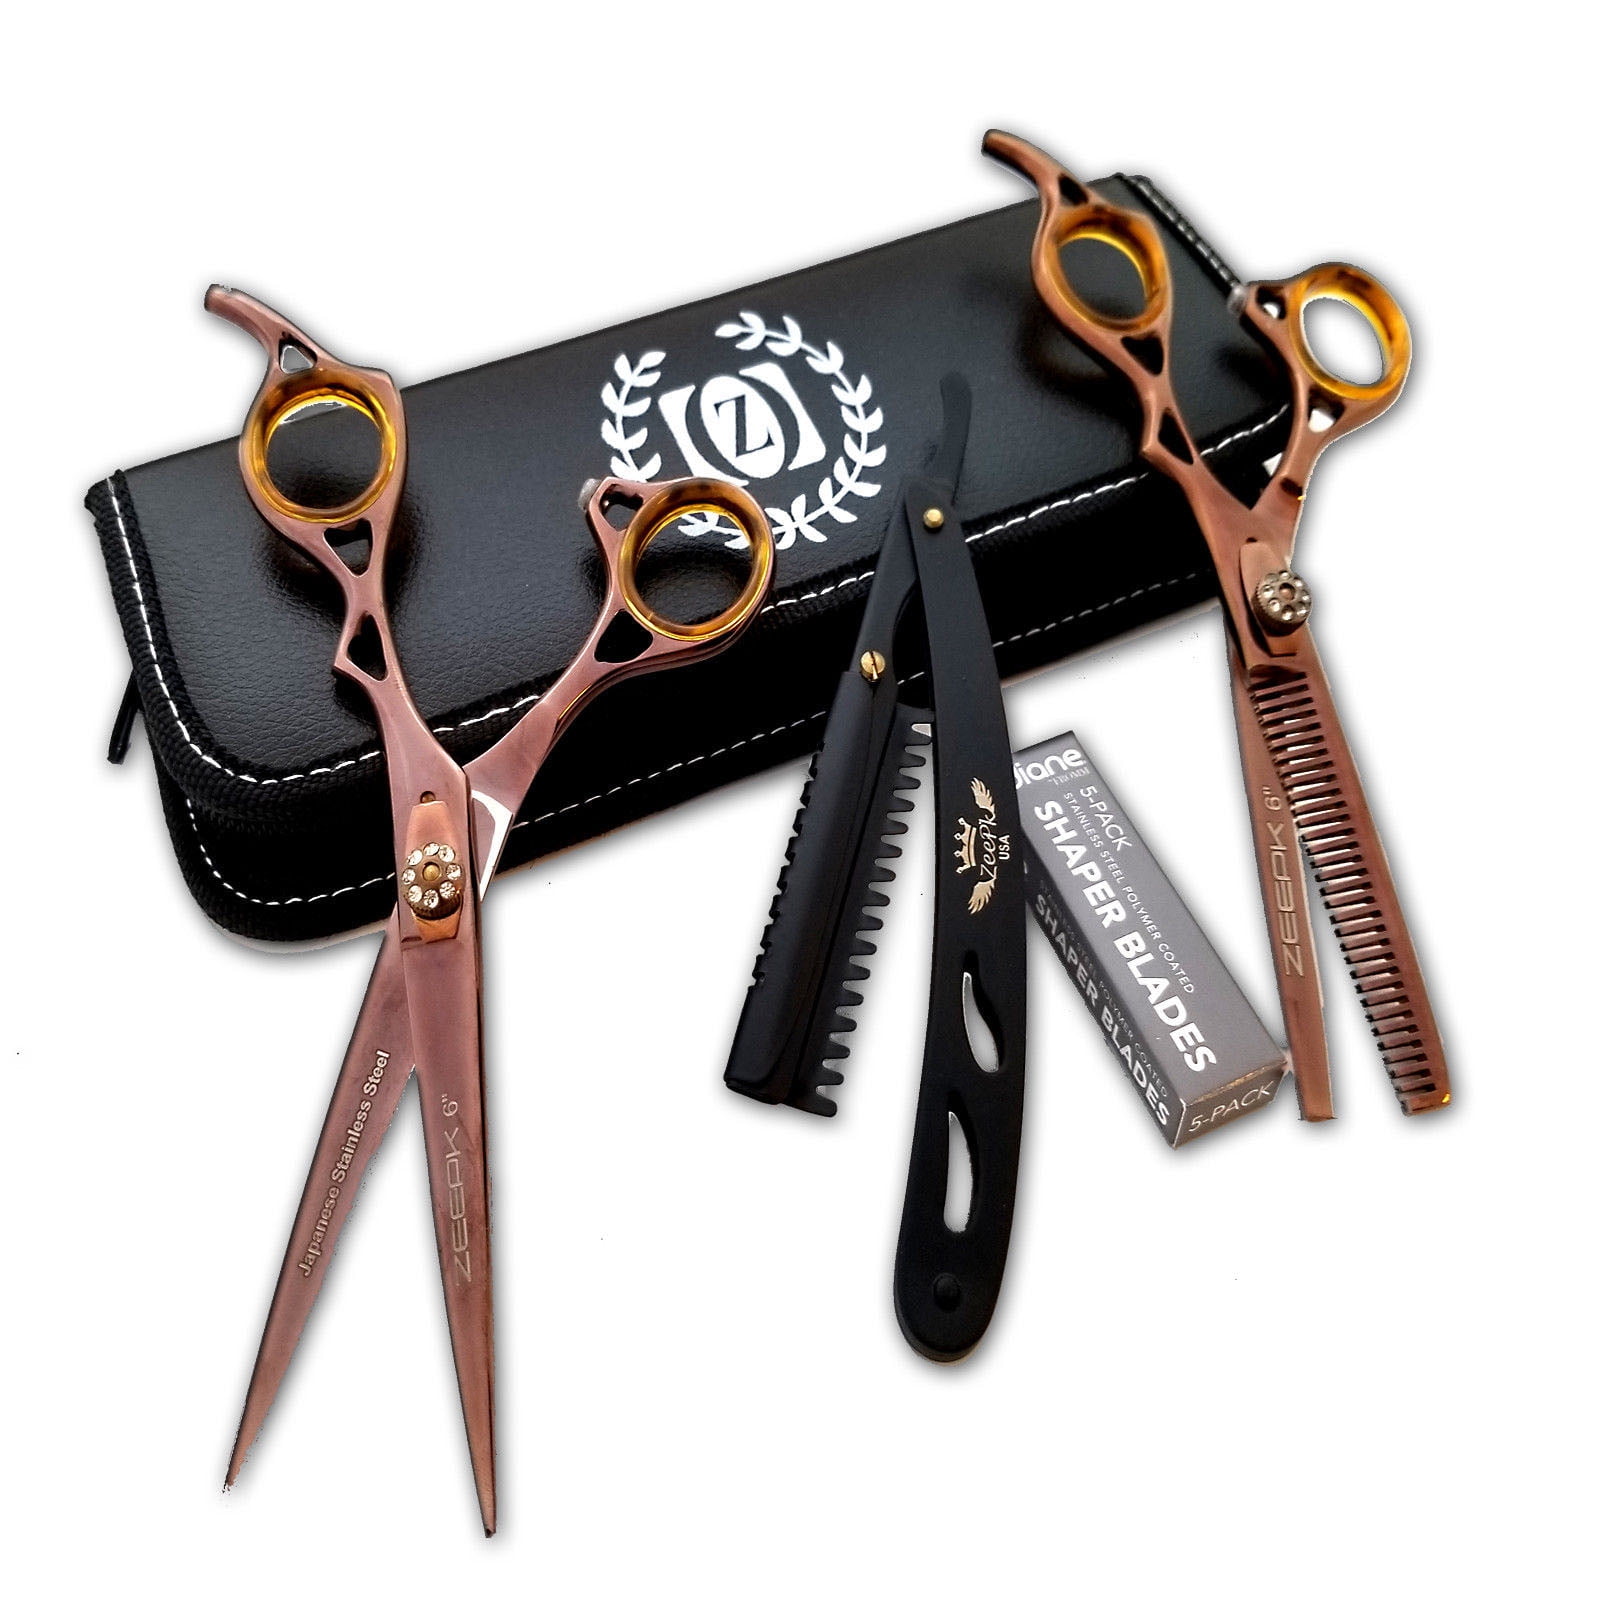 6 Professional Hair Cutting Japanese Scissors Thinning Barber Shears Set Kit